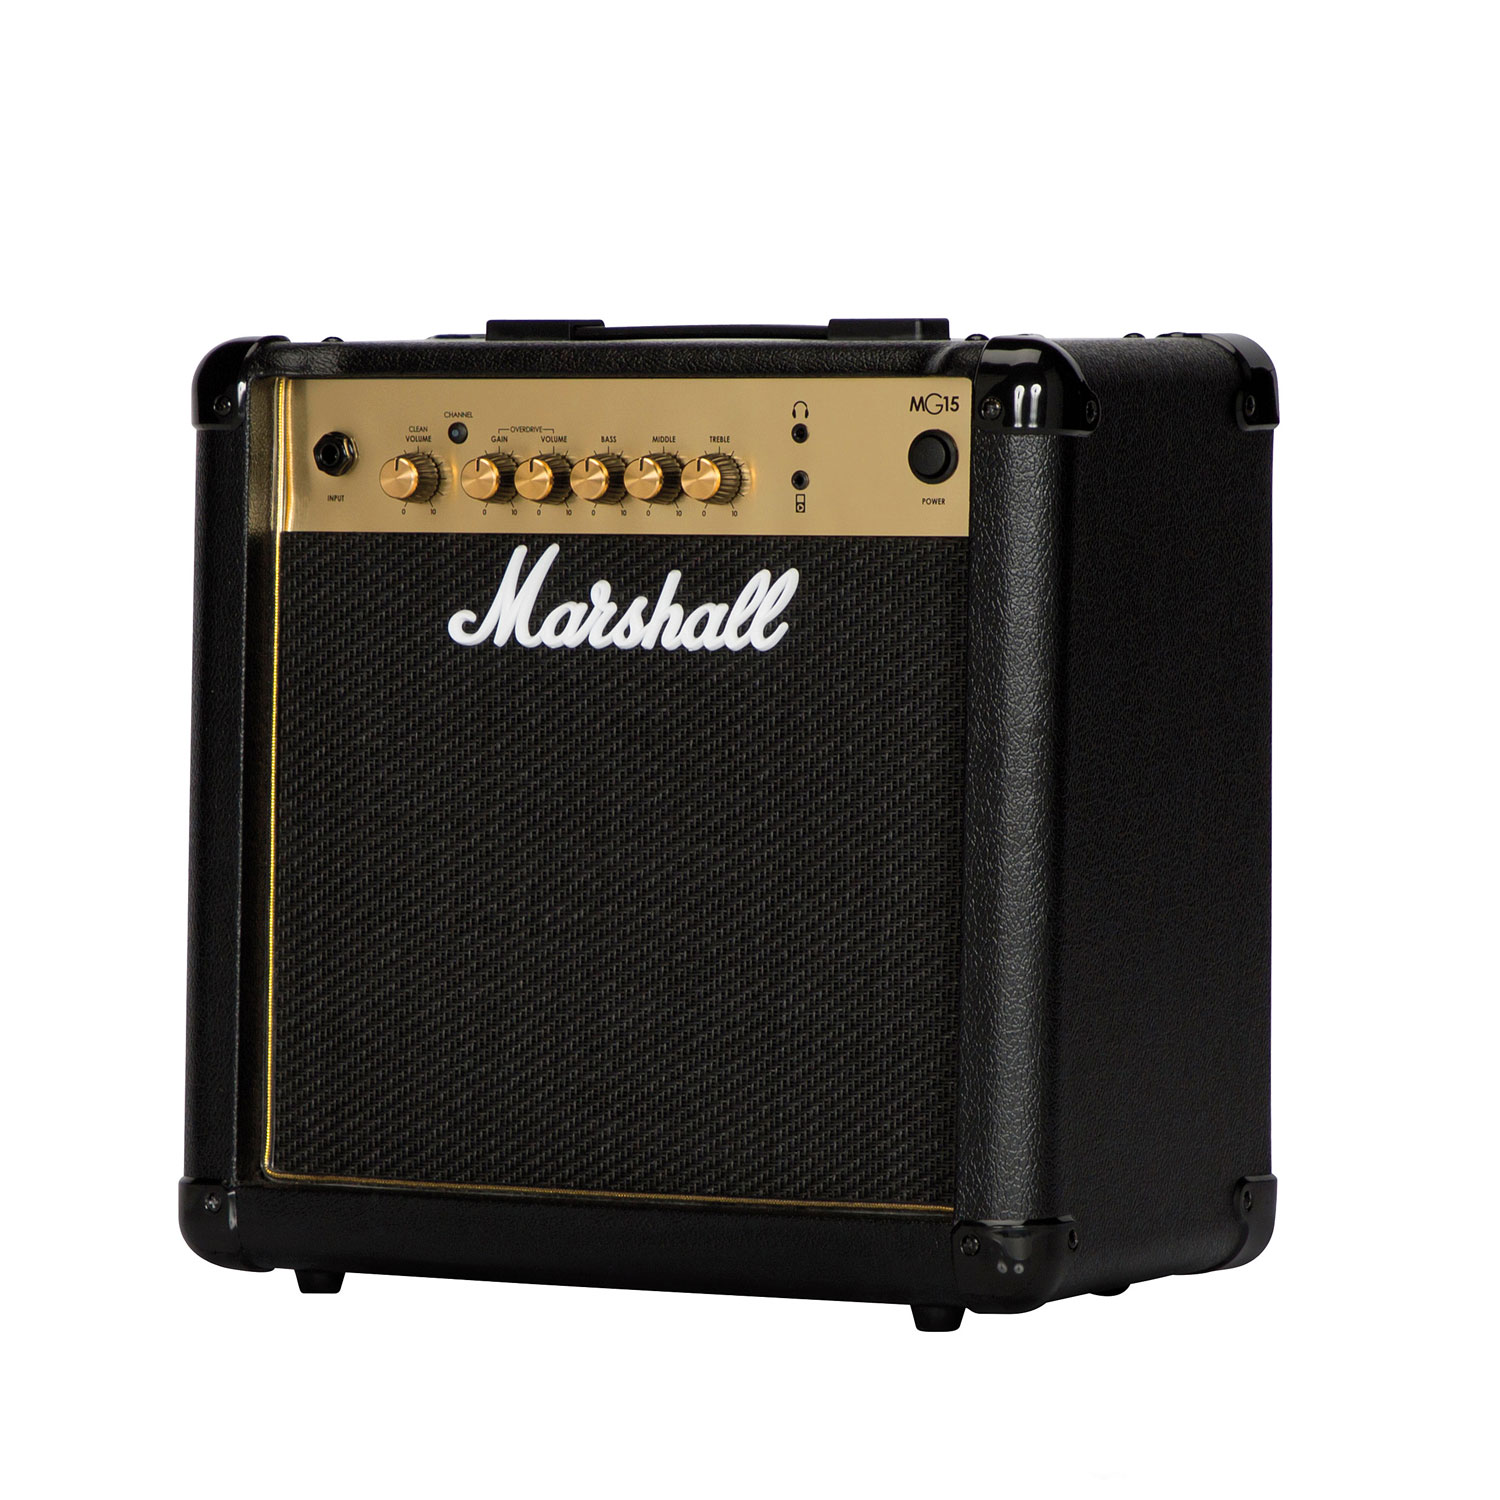 Cach-Su-Dung-Amply-Marshall-MG15-Gold-Ampli-dan-Guitar-dien-Combo-Amplifier-Tiki